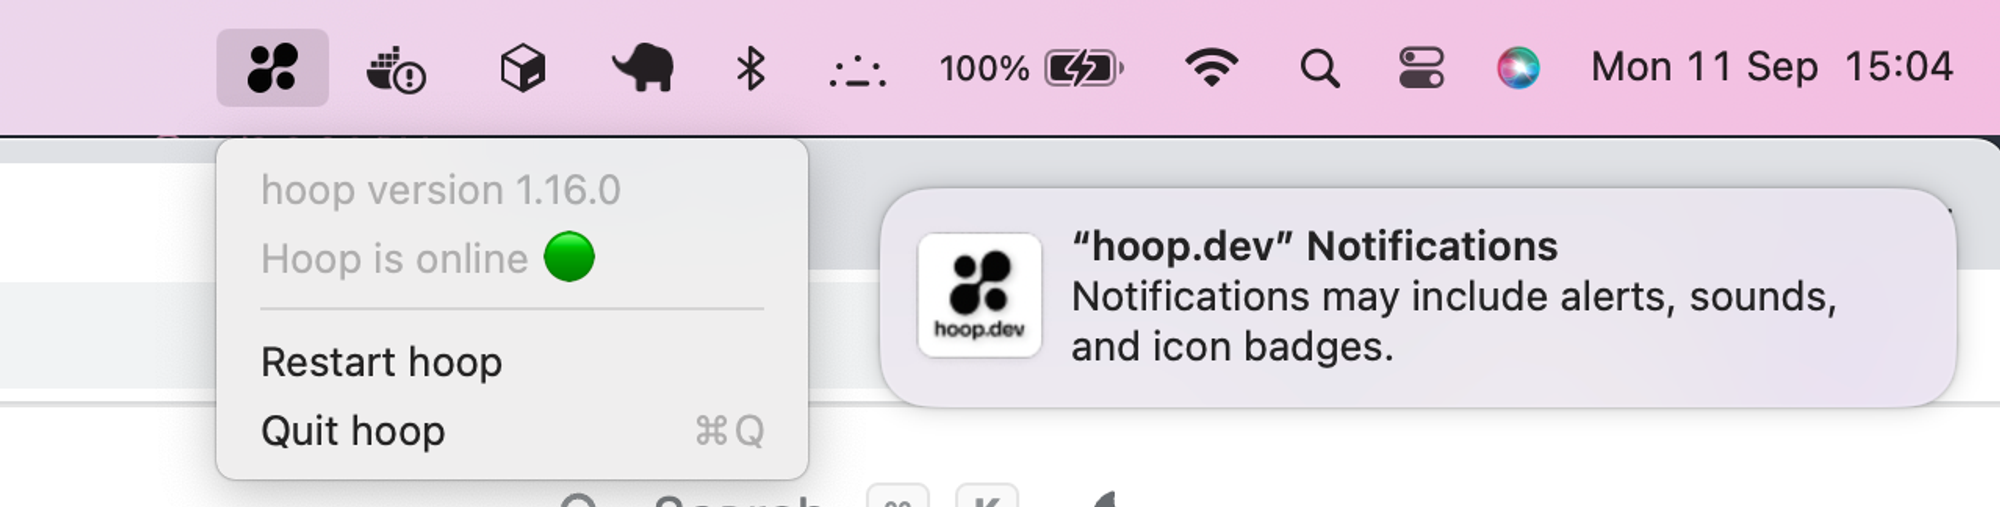 hoop desktop app